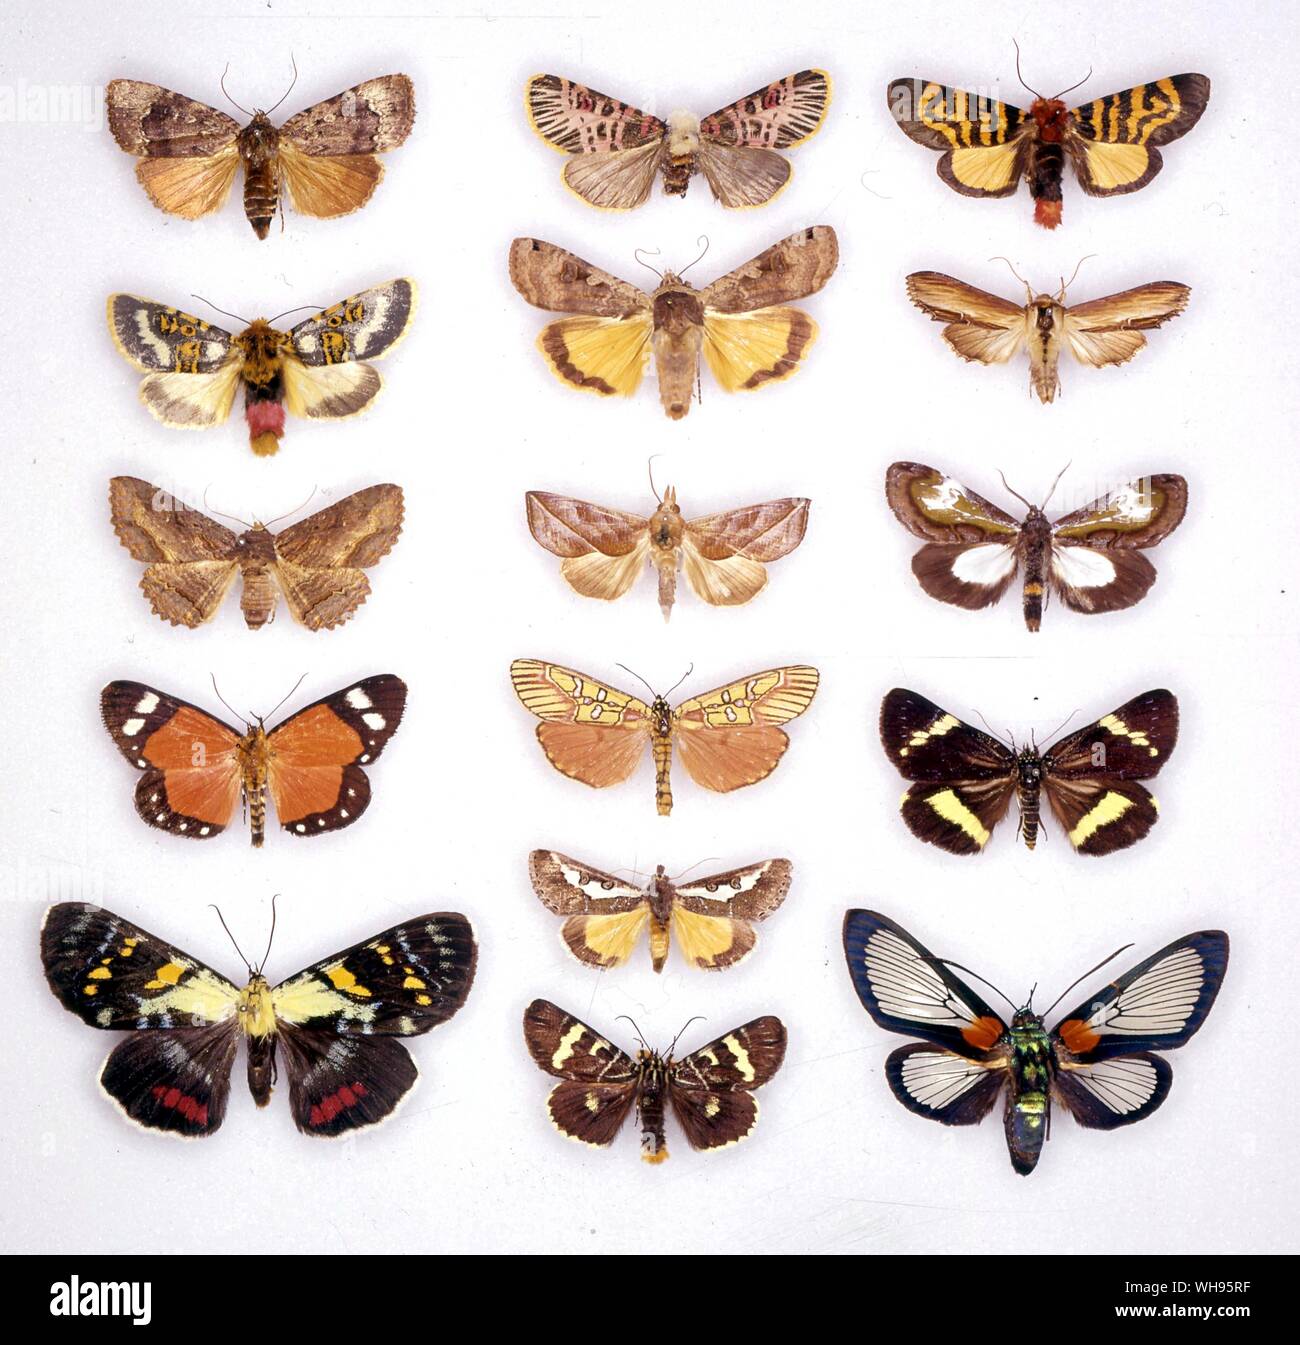 Butterflies/moths - (left top to bottom) Amphipyra pyramidoides, Eudaphnaeura splendens, Zale lunata, Weymeria athene, Agarista agricola - (middle top to bottom) Capillamentum nigrofasciatum, Noctua pronuba, Calpe eustrigata, Choerapais jucunda, Copidryas gloveri, Phalaenoides glycine - (right top to bottom) Daphoenura fasciata, Cucullia verbasci, Erocha leucodisca, Platagarista tetrapleura, Cocytia durvillii Stock Photo